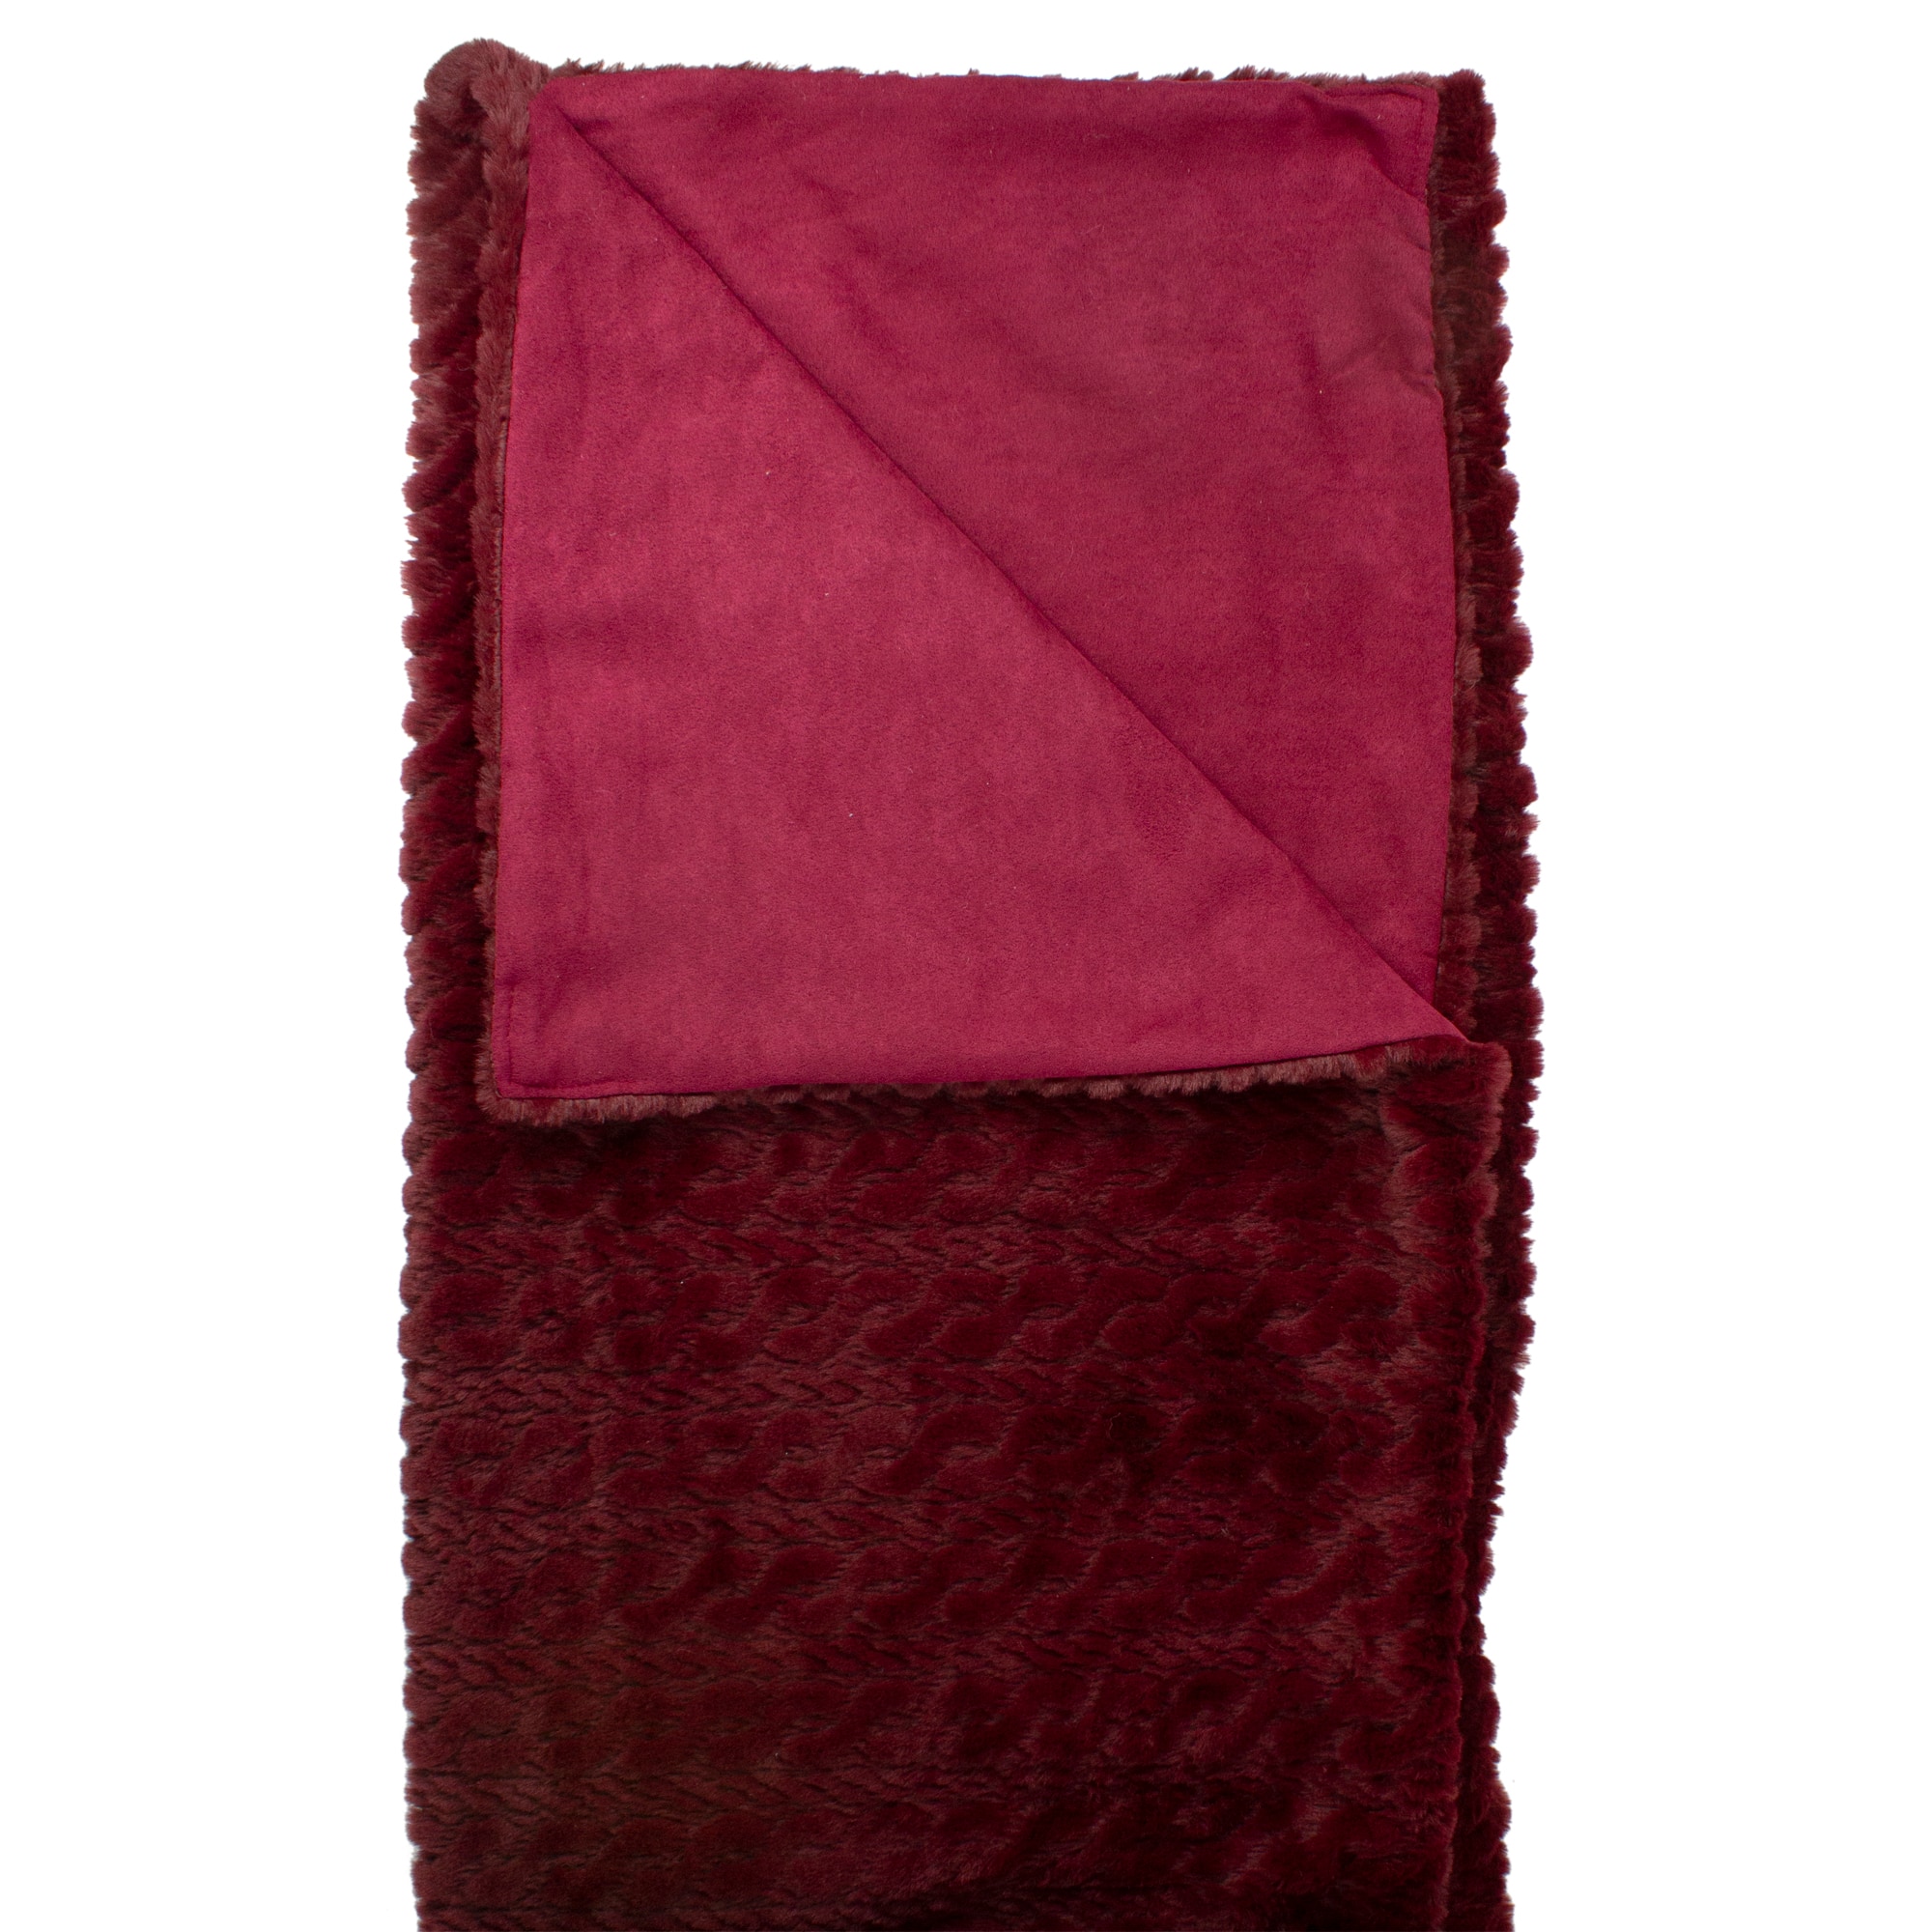 Burgundy Red Ultra Plush Faux Fur Throw Blanket